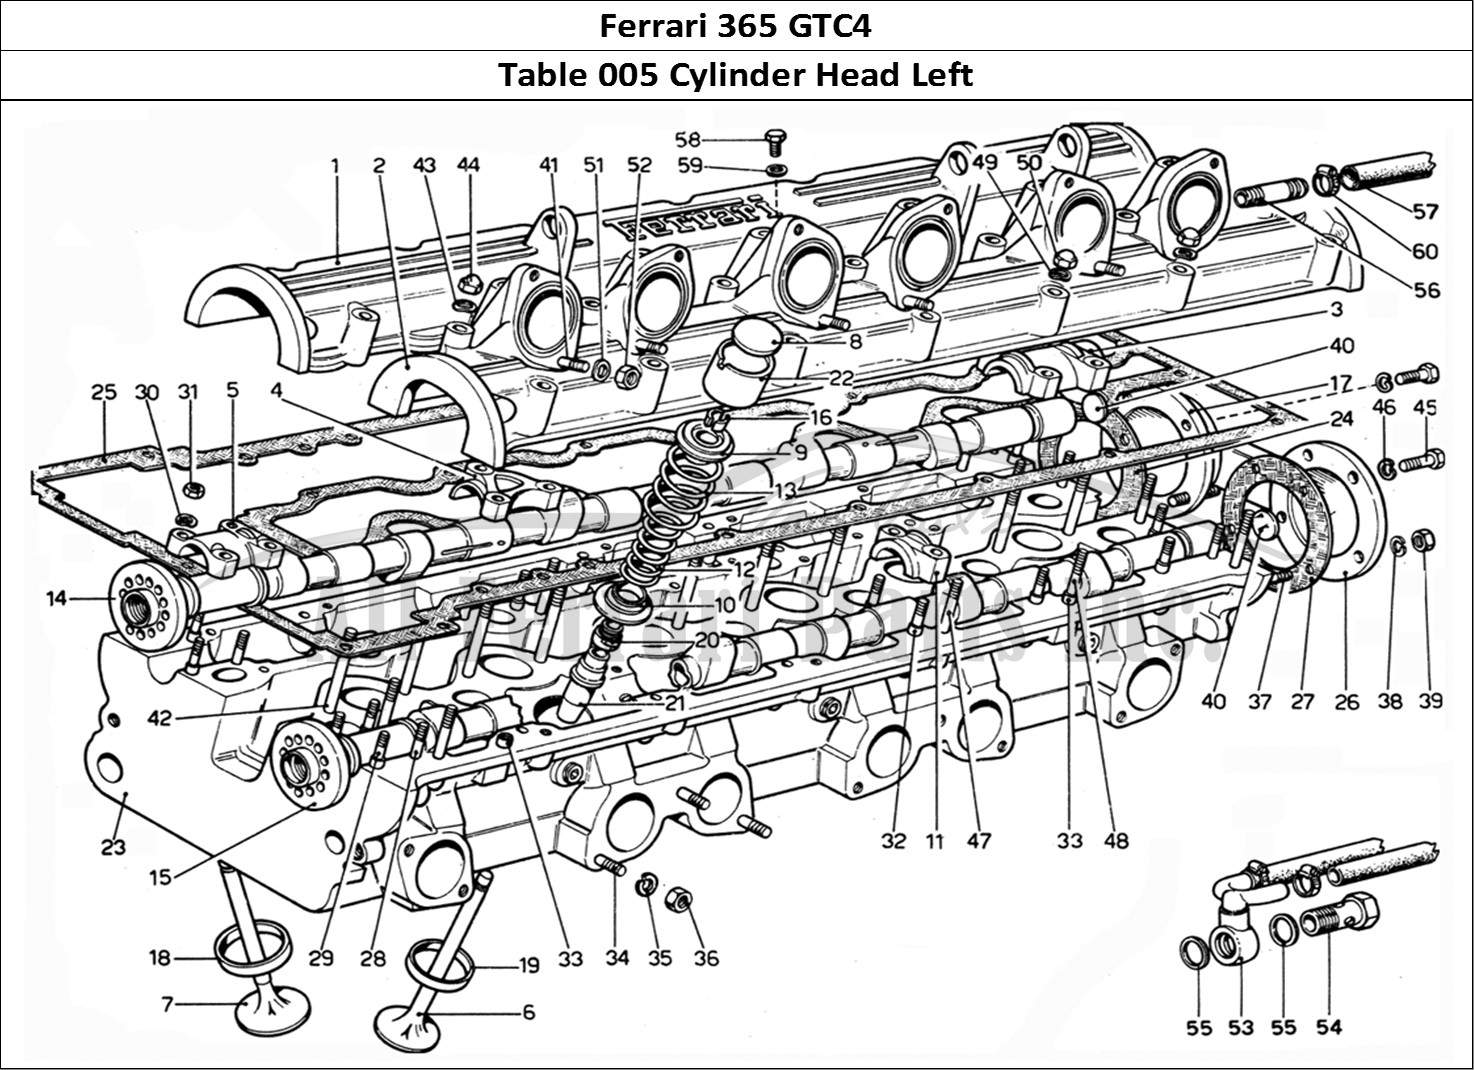 Ferrari Parts Ferrari 365 GTC4 (Mechanical) Page 005 Cylinder head LHS